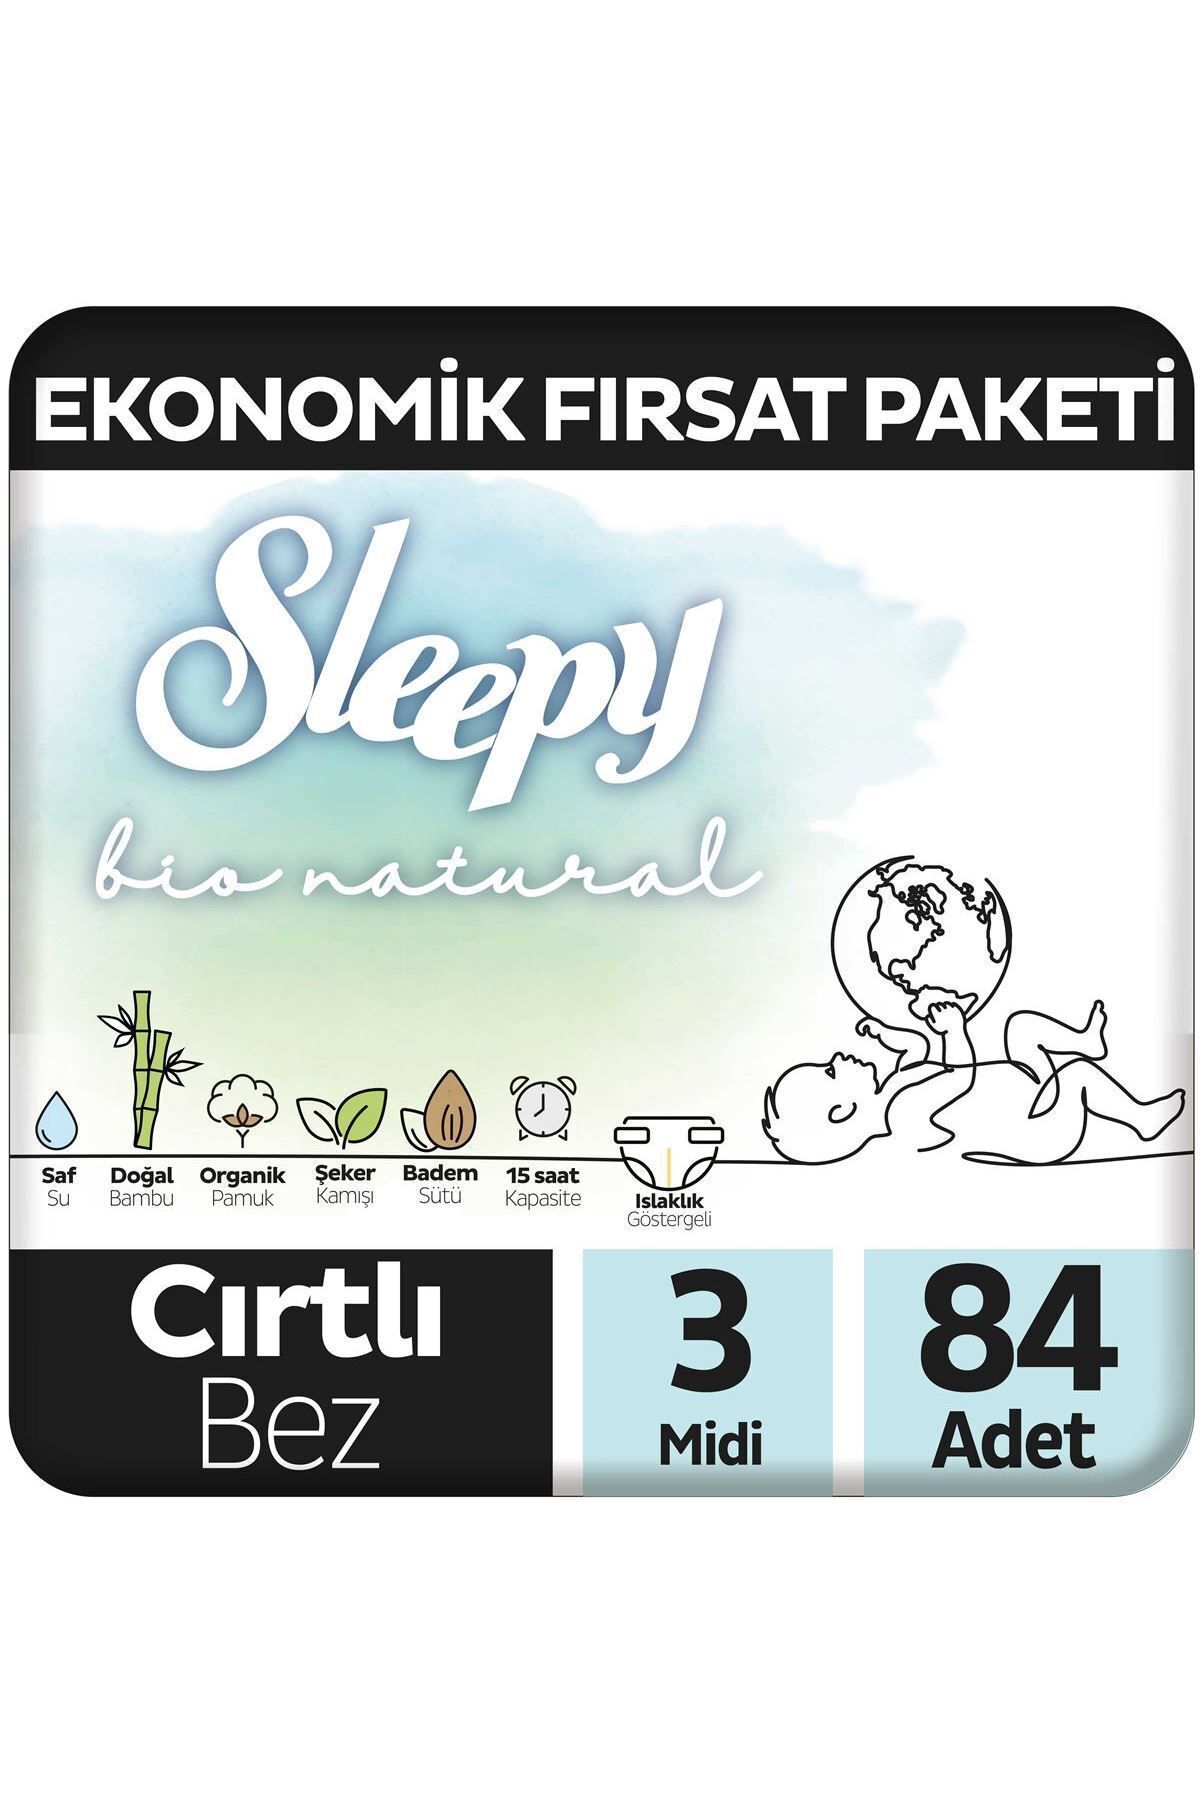 Sleepy Bio Natural Ekonomik Fırsat Paketi Bebek Bezi 3 Numara Midi 84 Adet